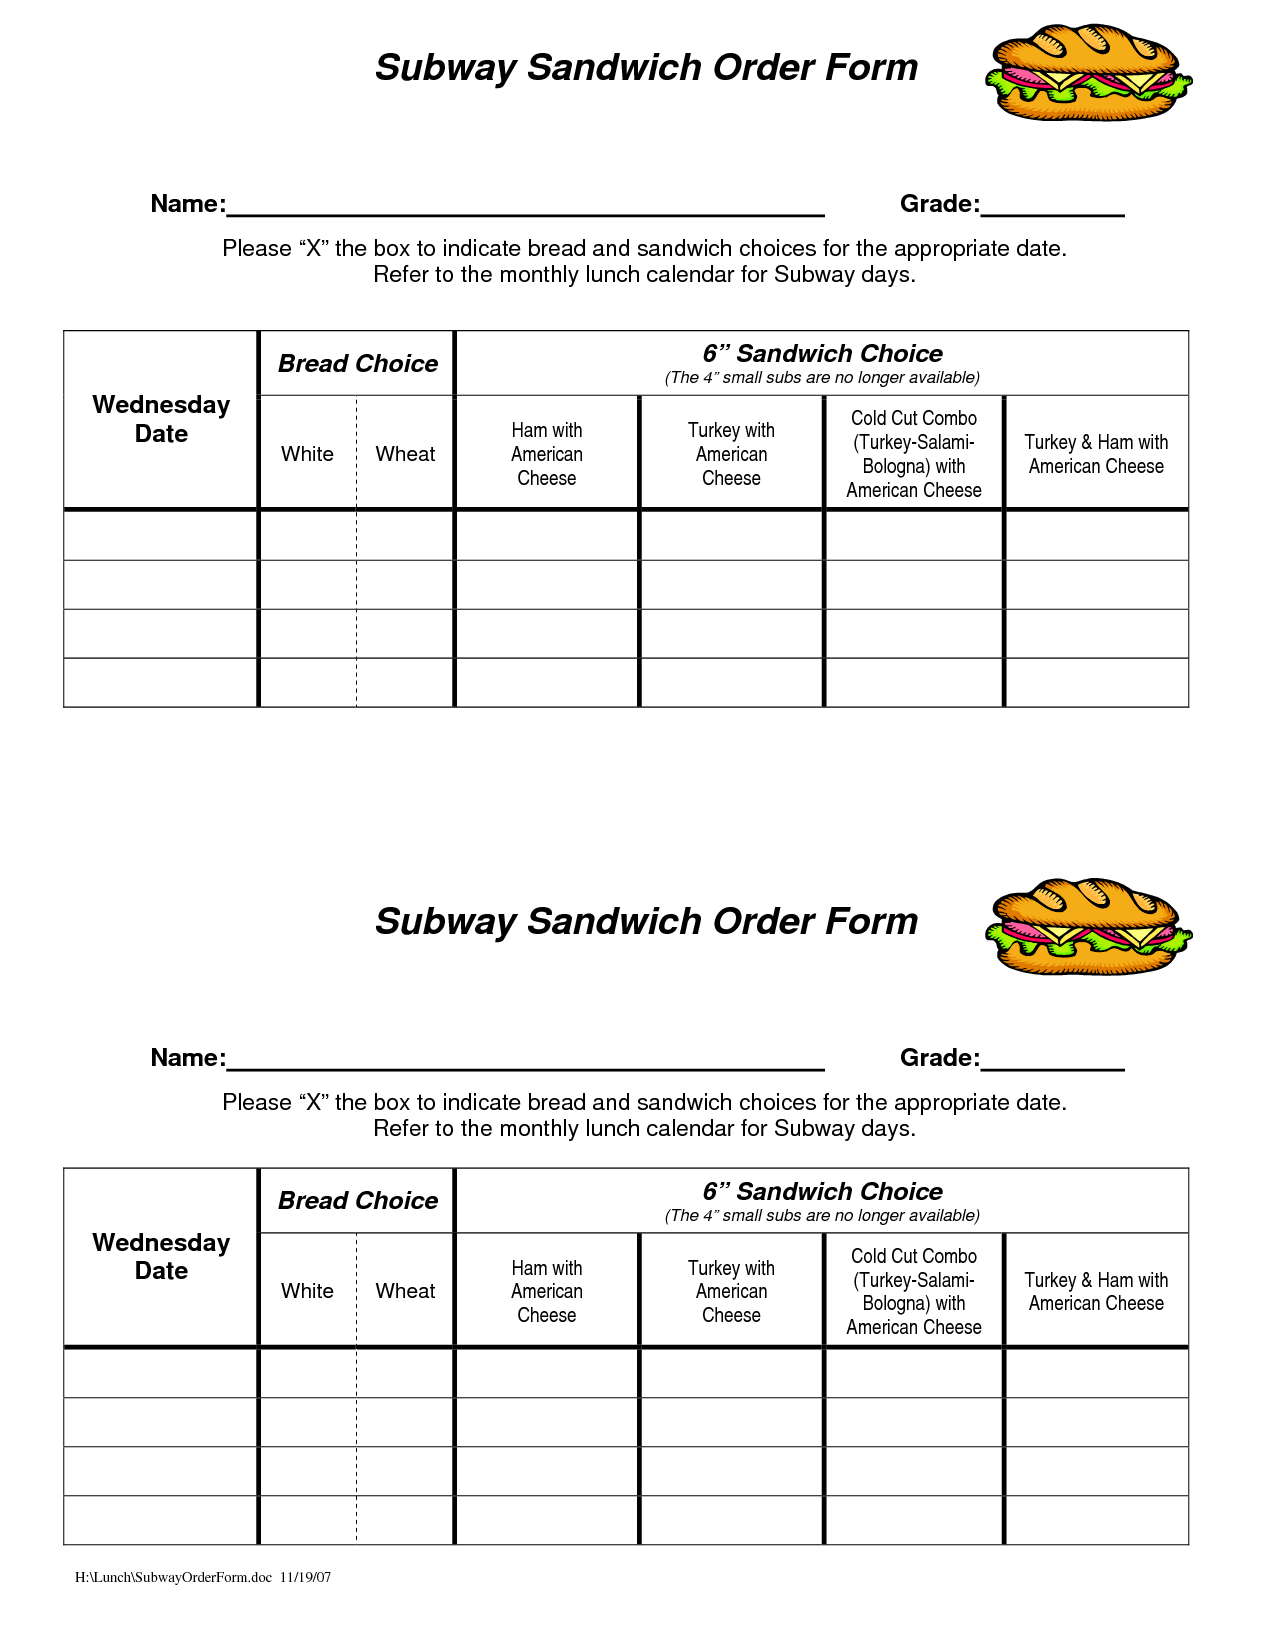 Subway Sandwich Order Form Template